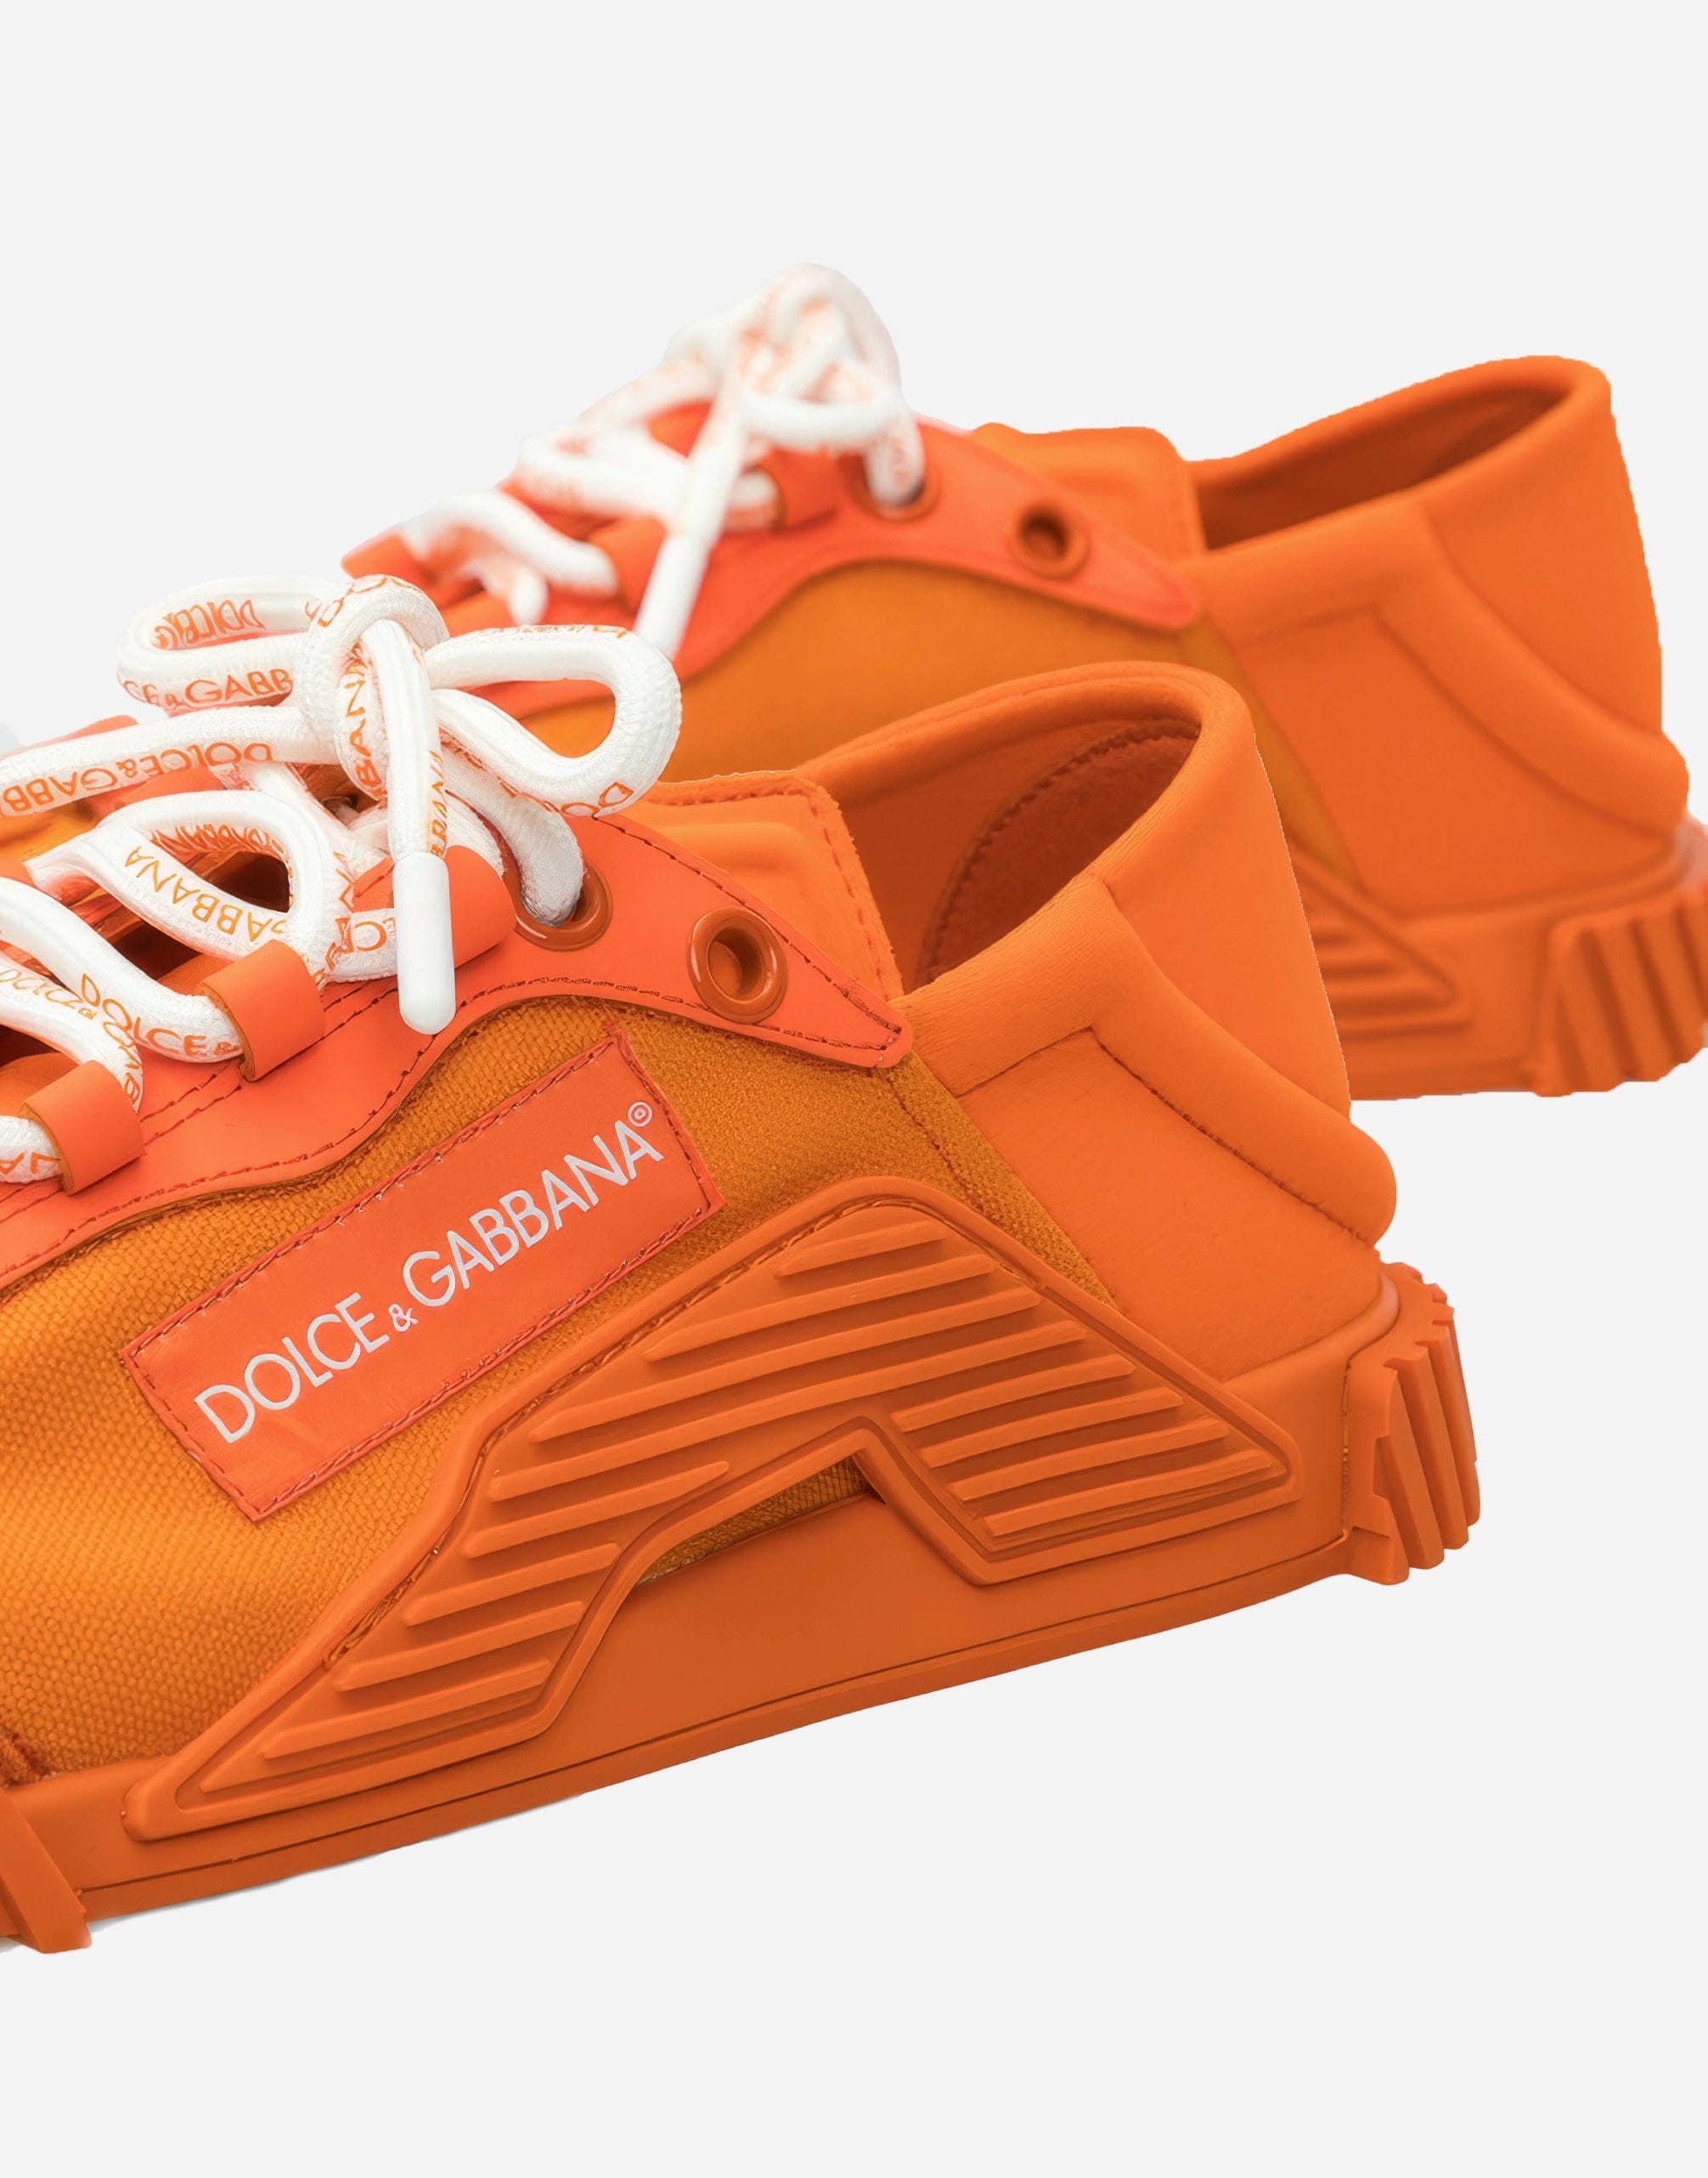 Dolce & Gabbana Orange NS1 Sneakers